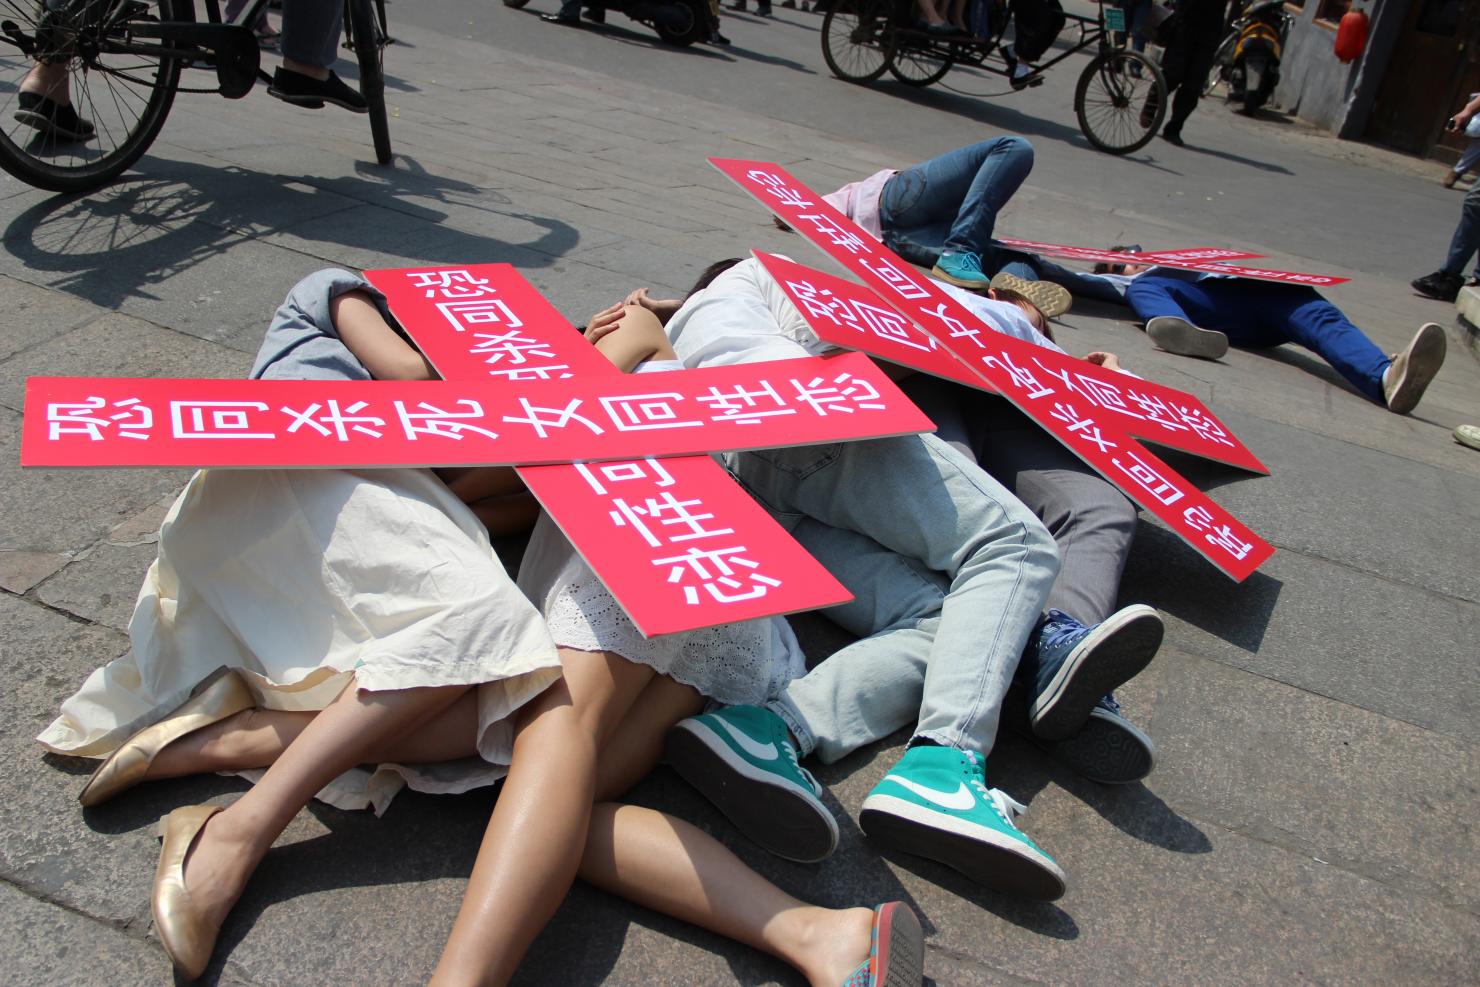 Homophobia Kills Lesbians protest